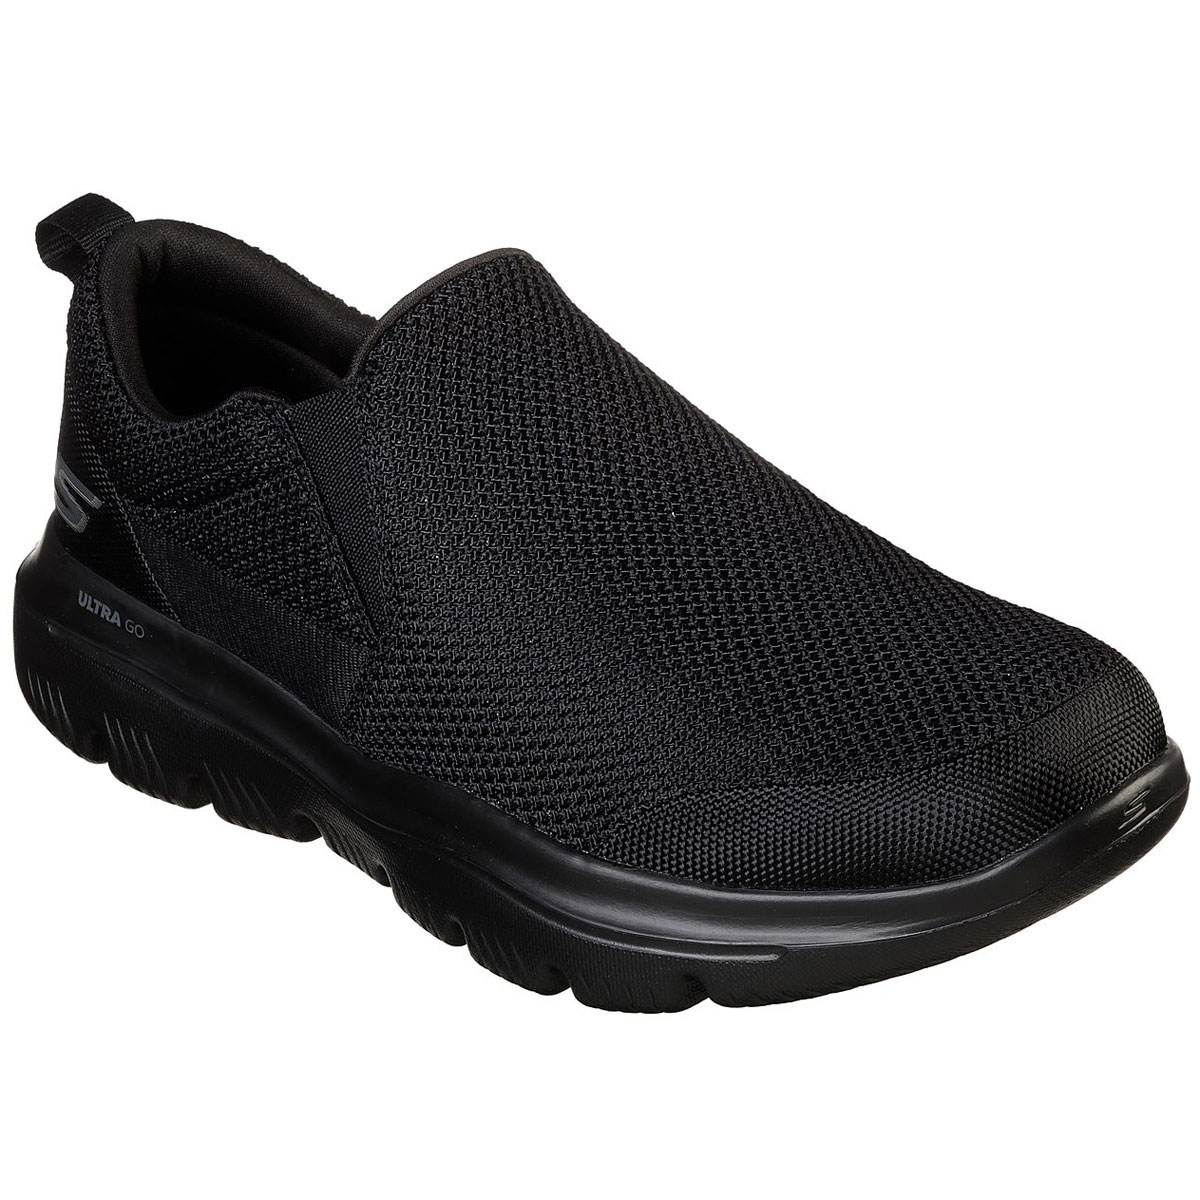 Skechers Men's Gowalk Evolution Ultra Impeccable Slip-On Walking Sneakers - Black, 13